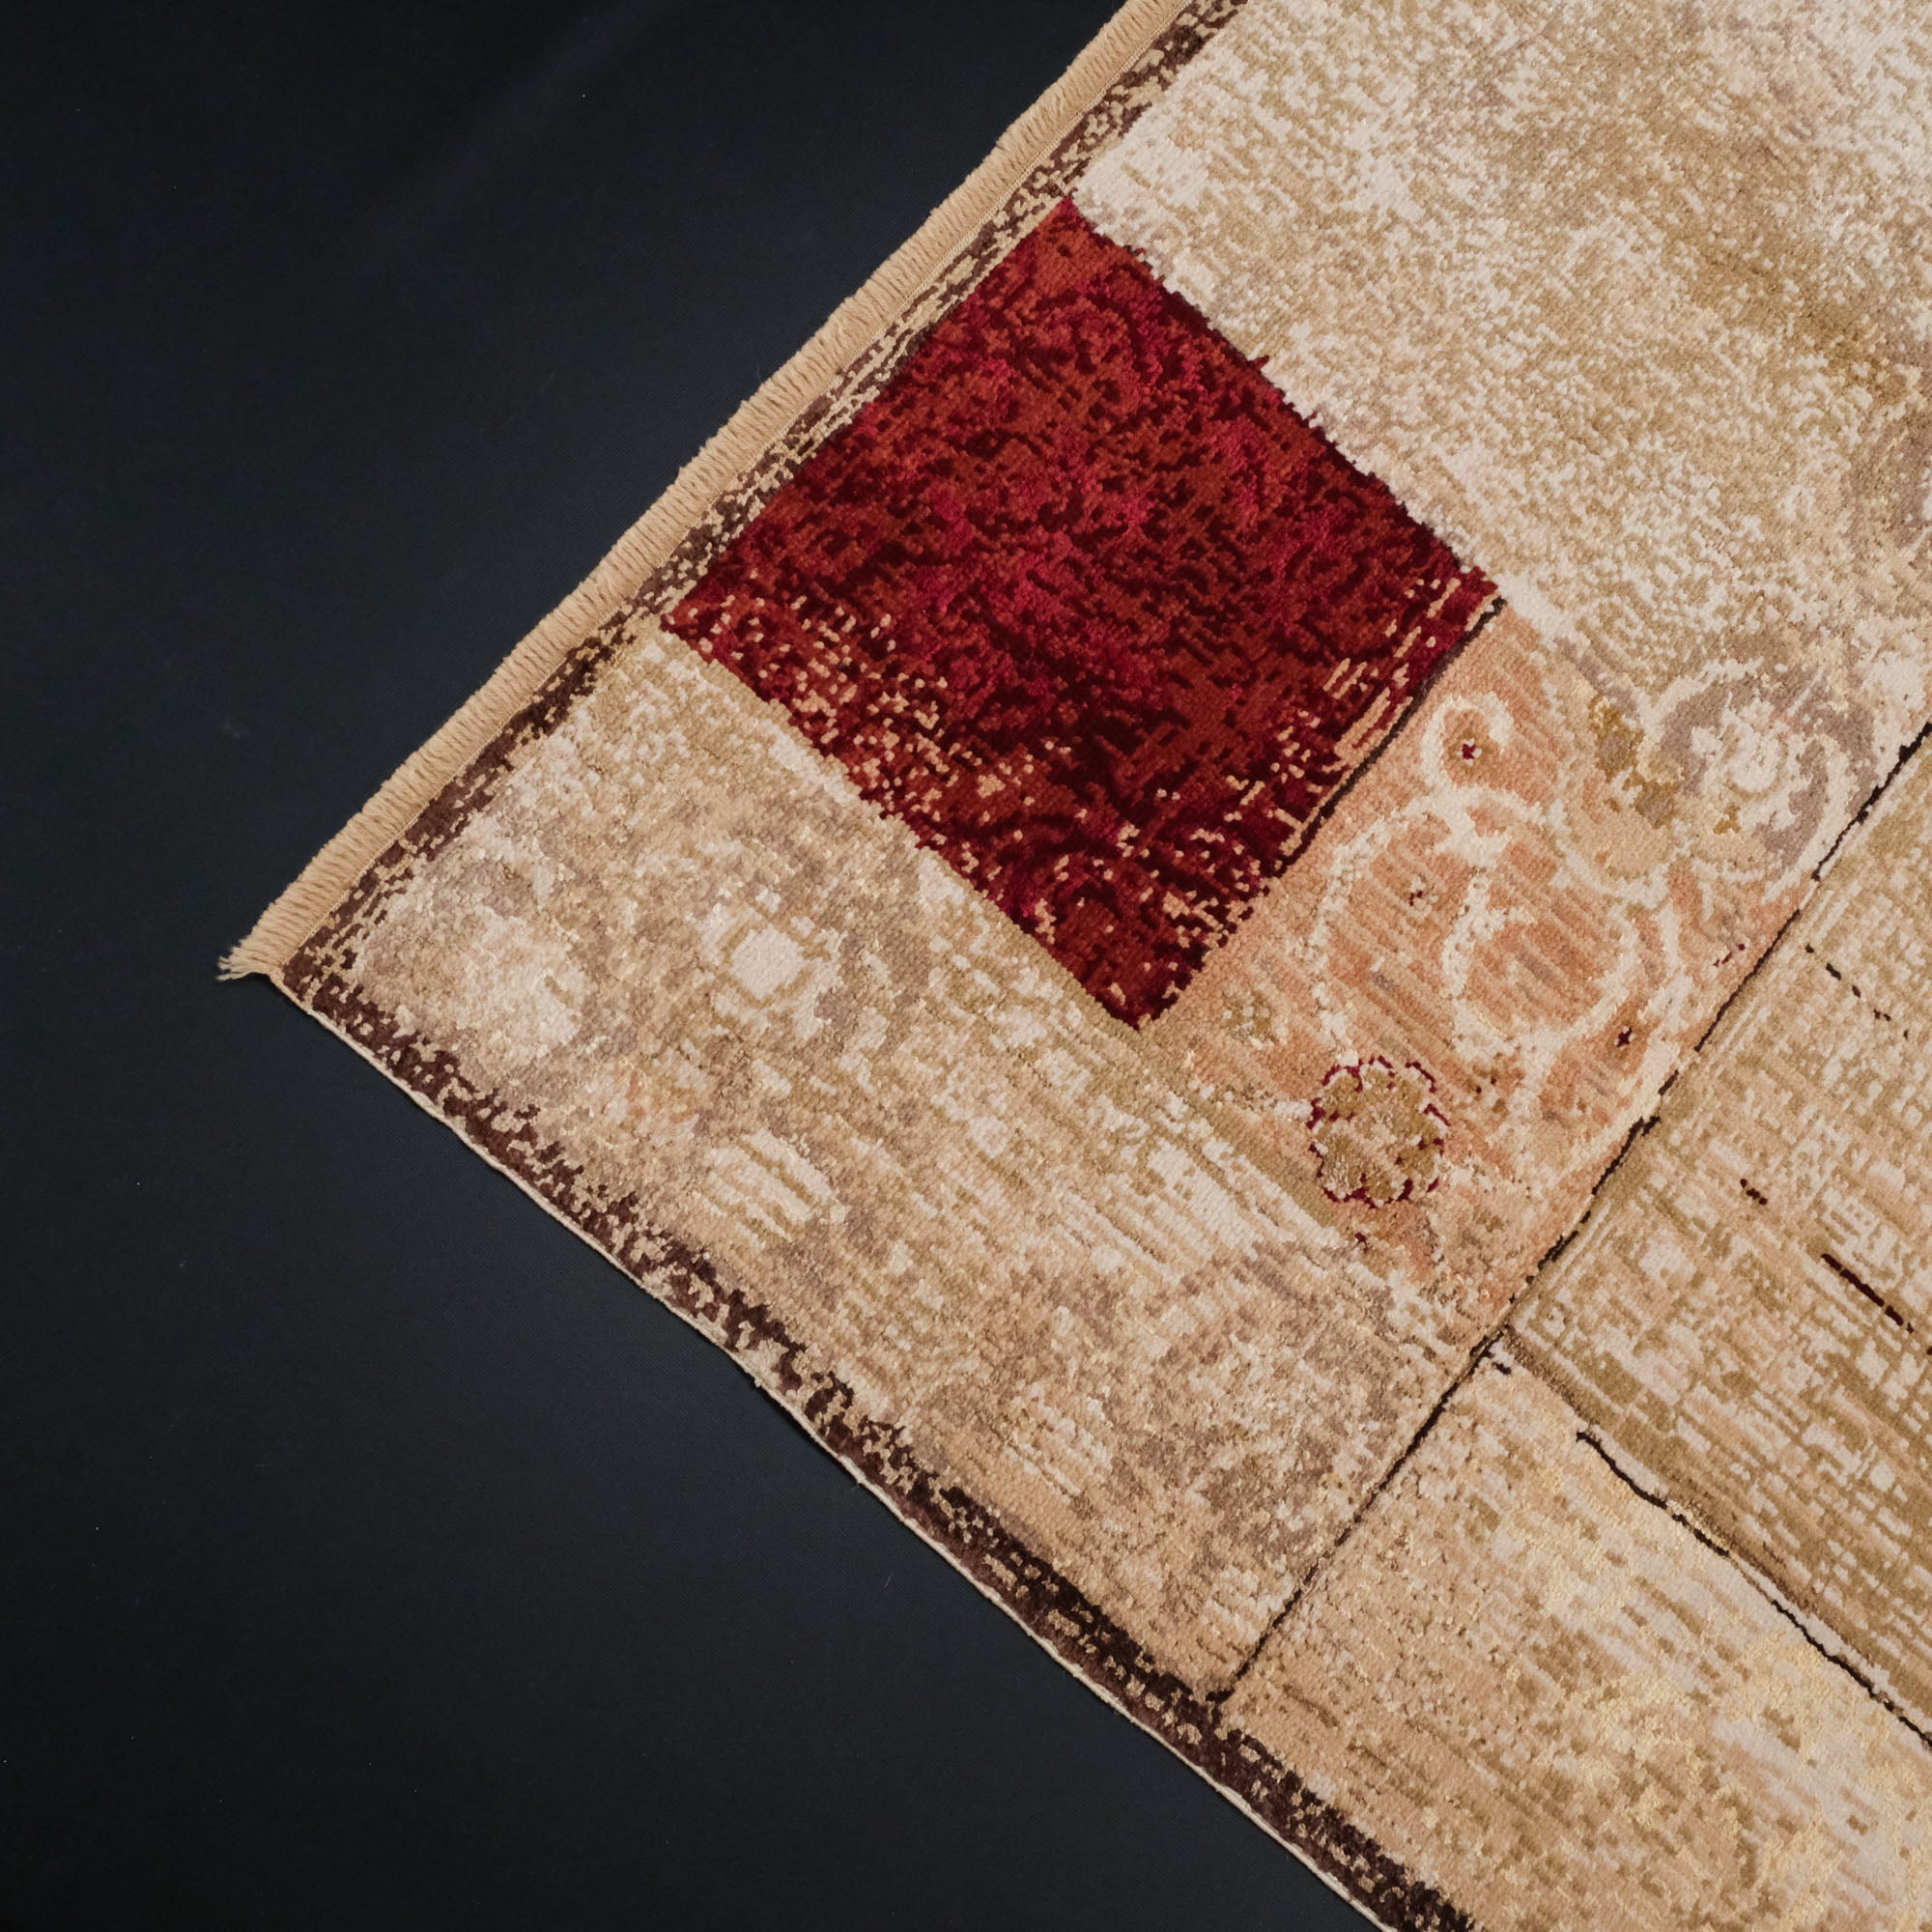 Hand Woven Vintage Patterned Beige Wool Carpet